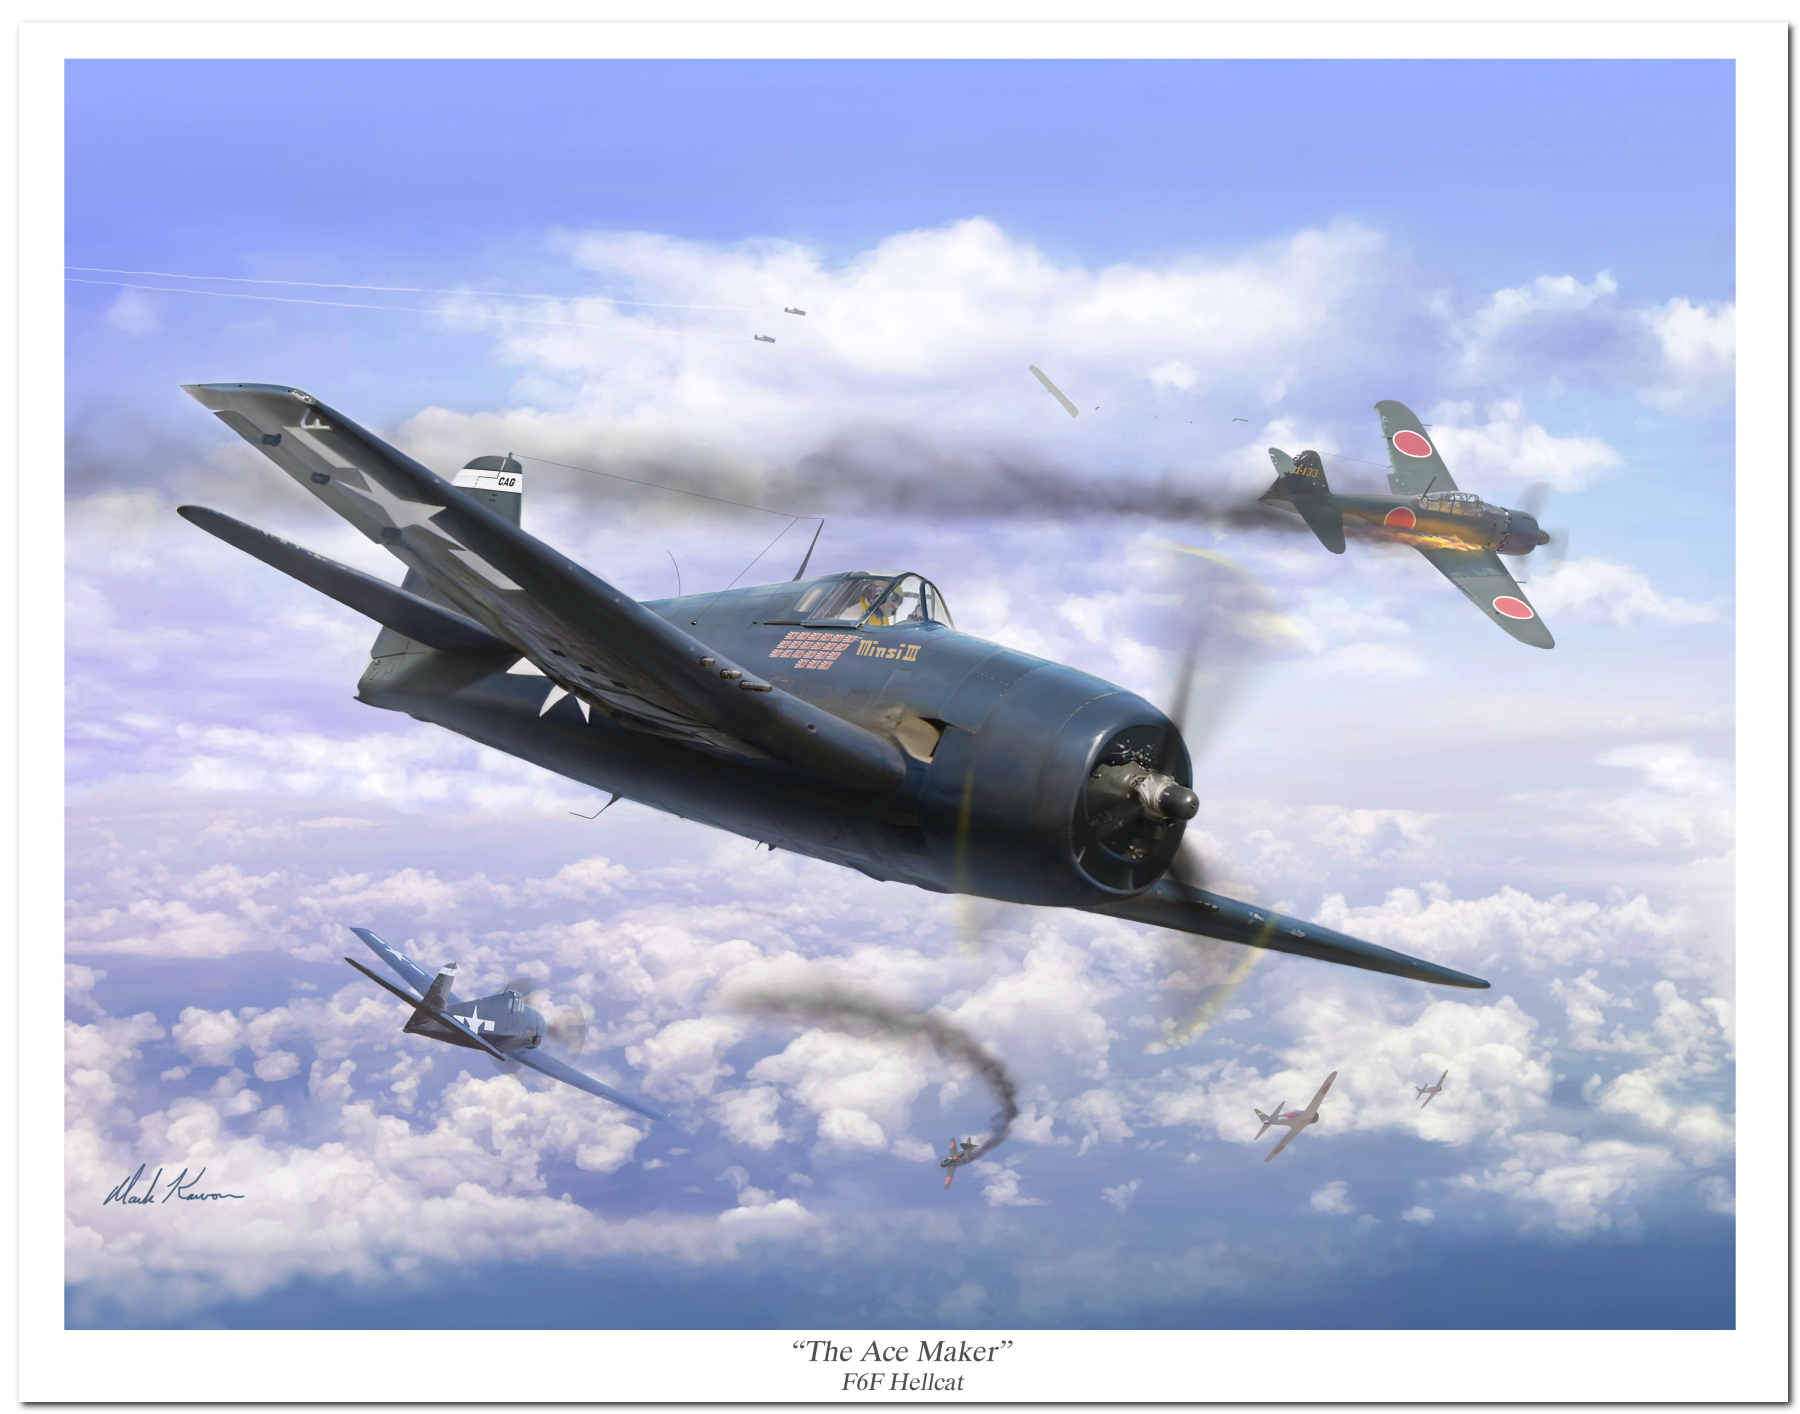 "The Ace Maker" by Mark Karvon, featuring the Grumman F6F Hellcat